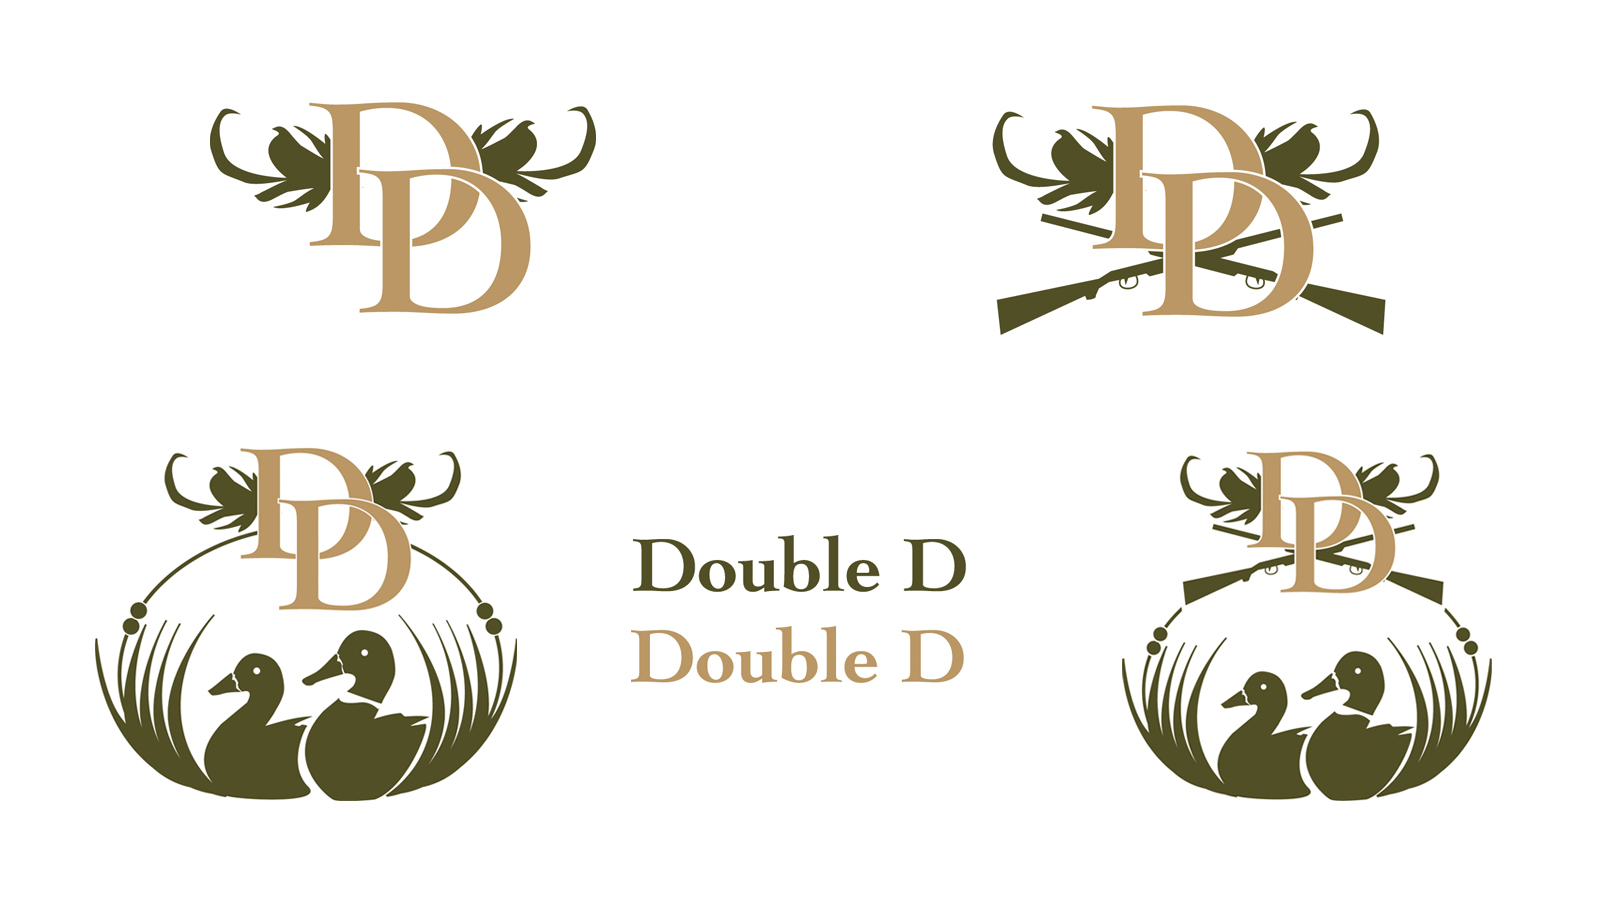 Double-D-logos-large.jpg